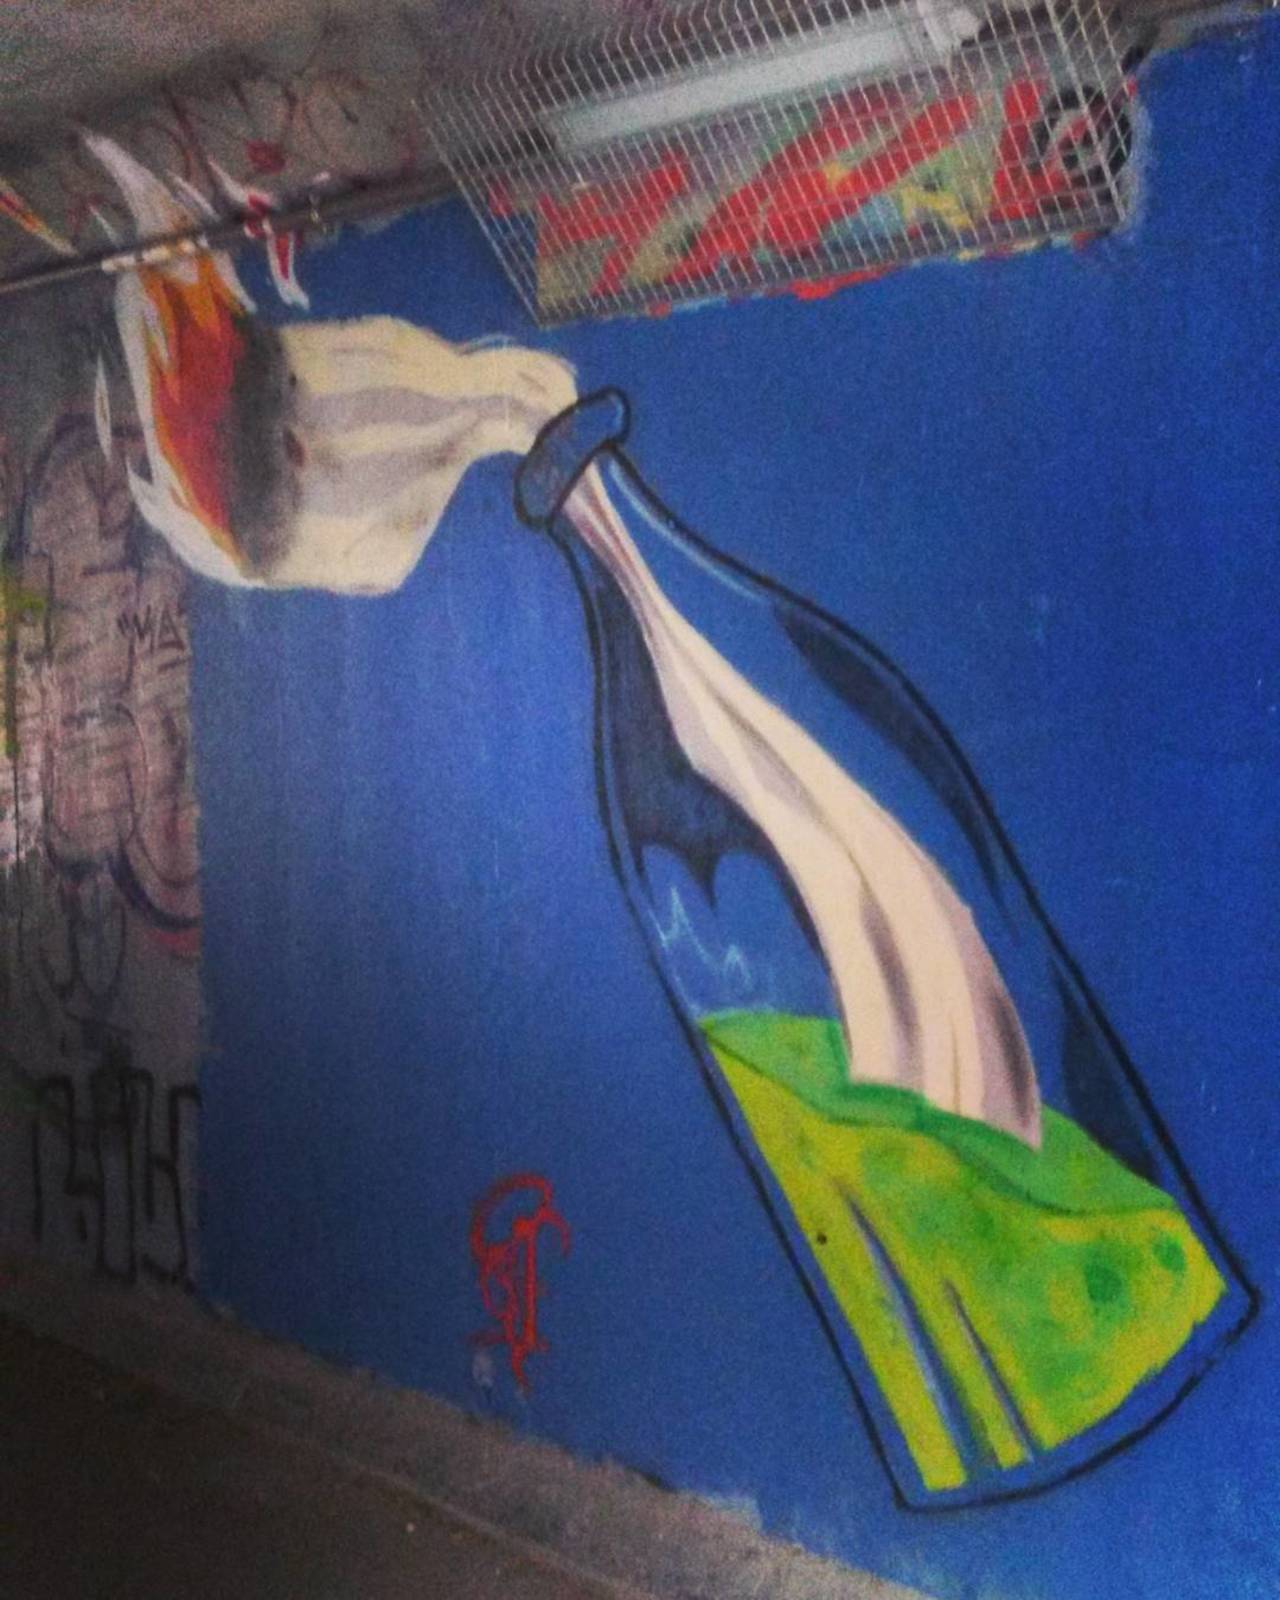 #Paris #graffiti photo by @le_cyclopede http://ift.tt/1OQyBu5 #StreetArt https://t.co/GxDbAnOSRB